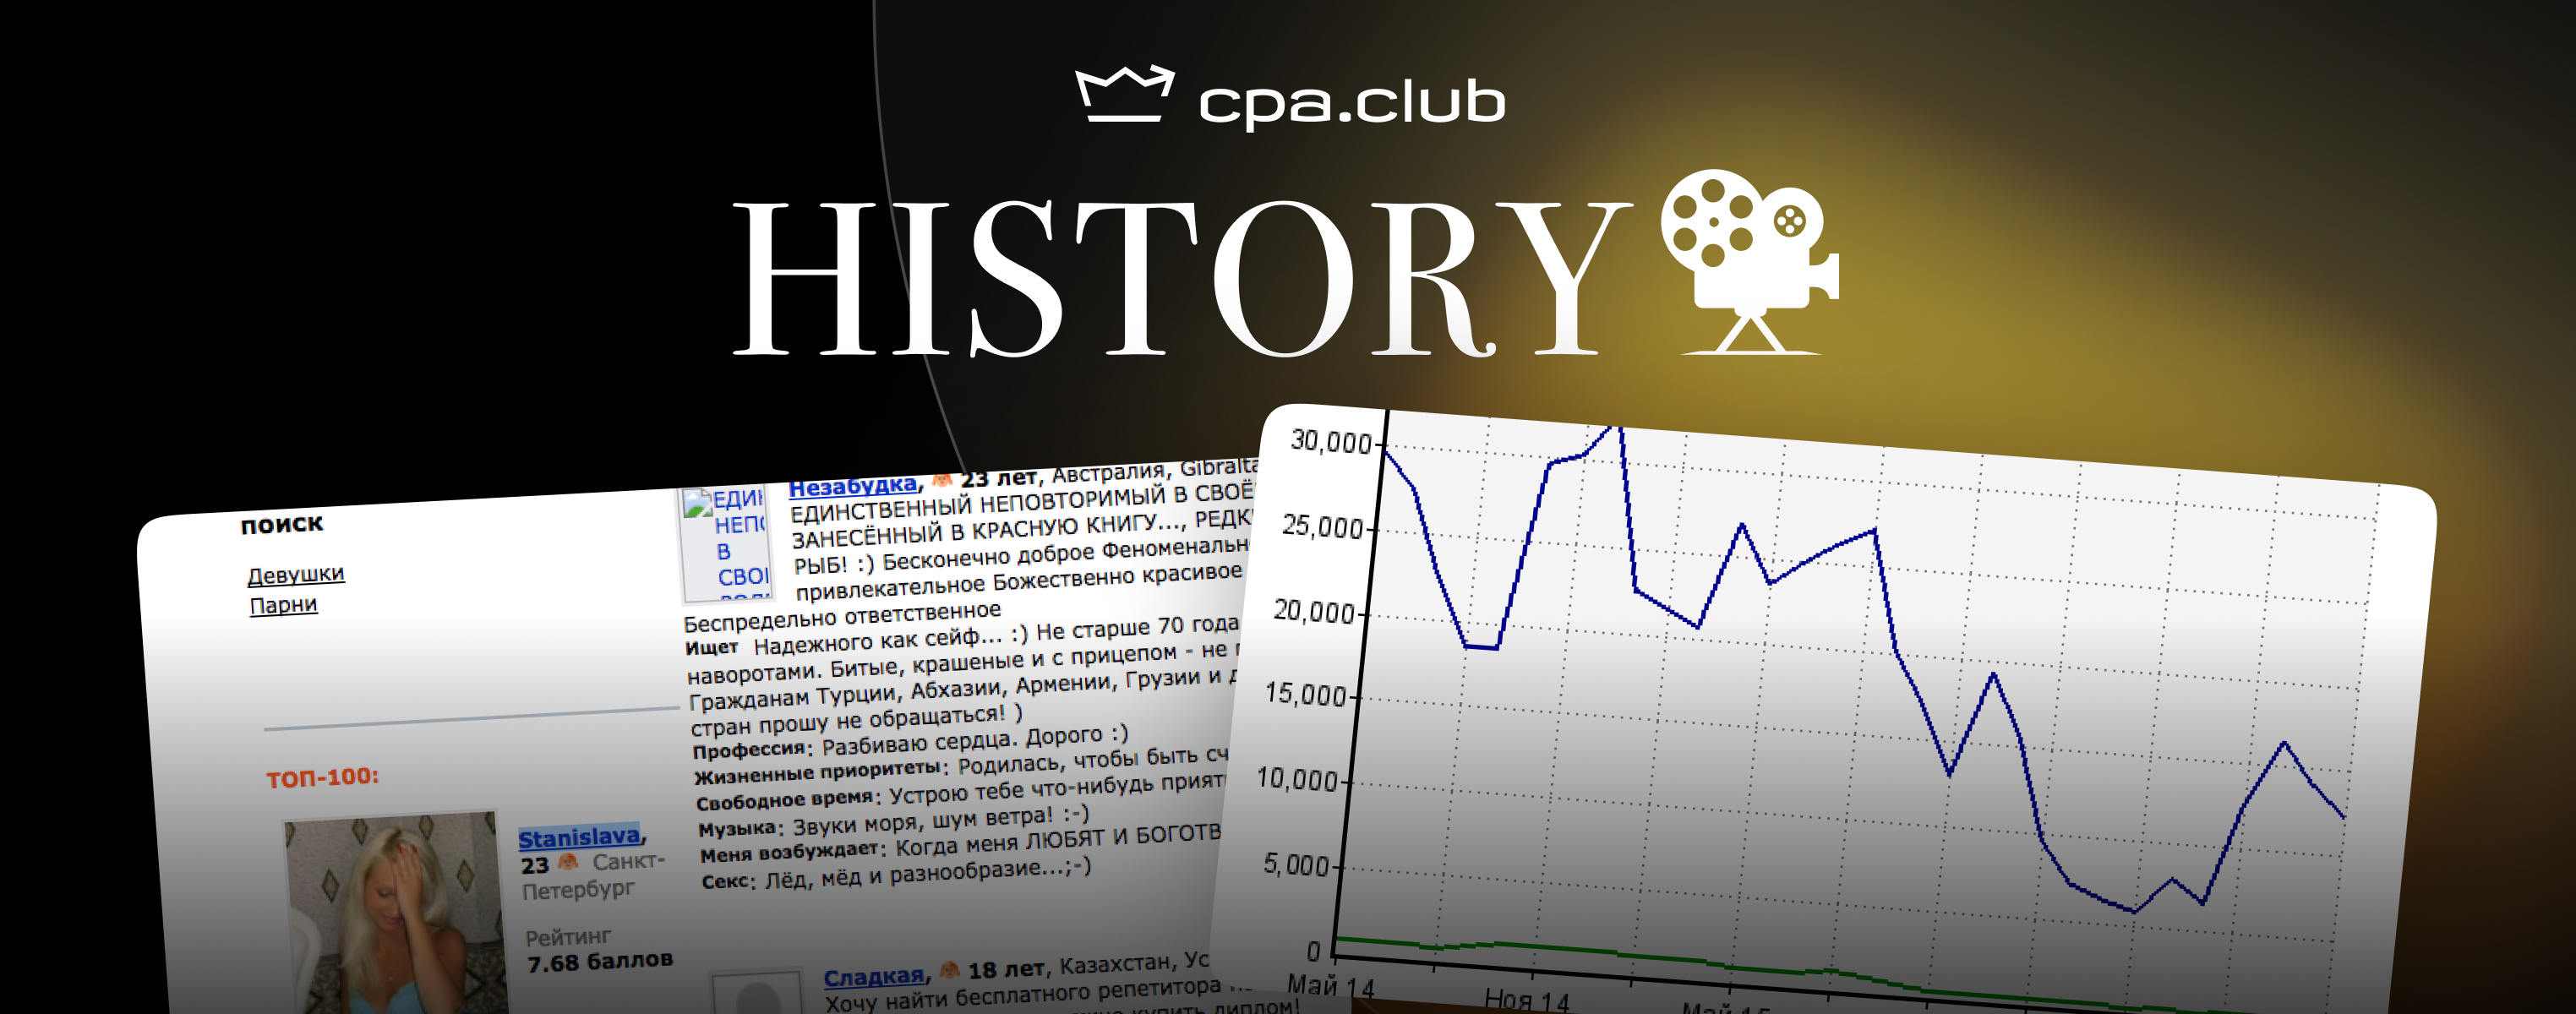 Cpa.Club History. Ретрокейс на 10 лет RevShare.